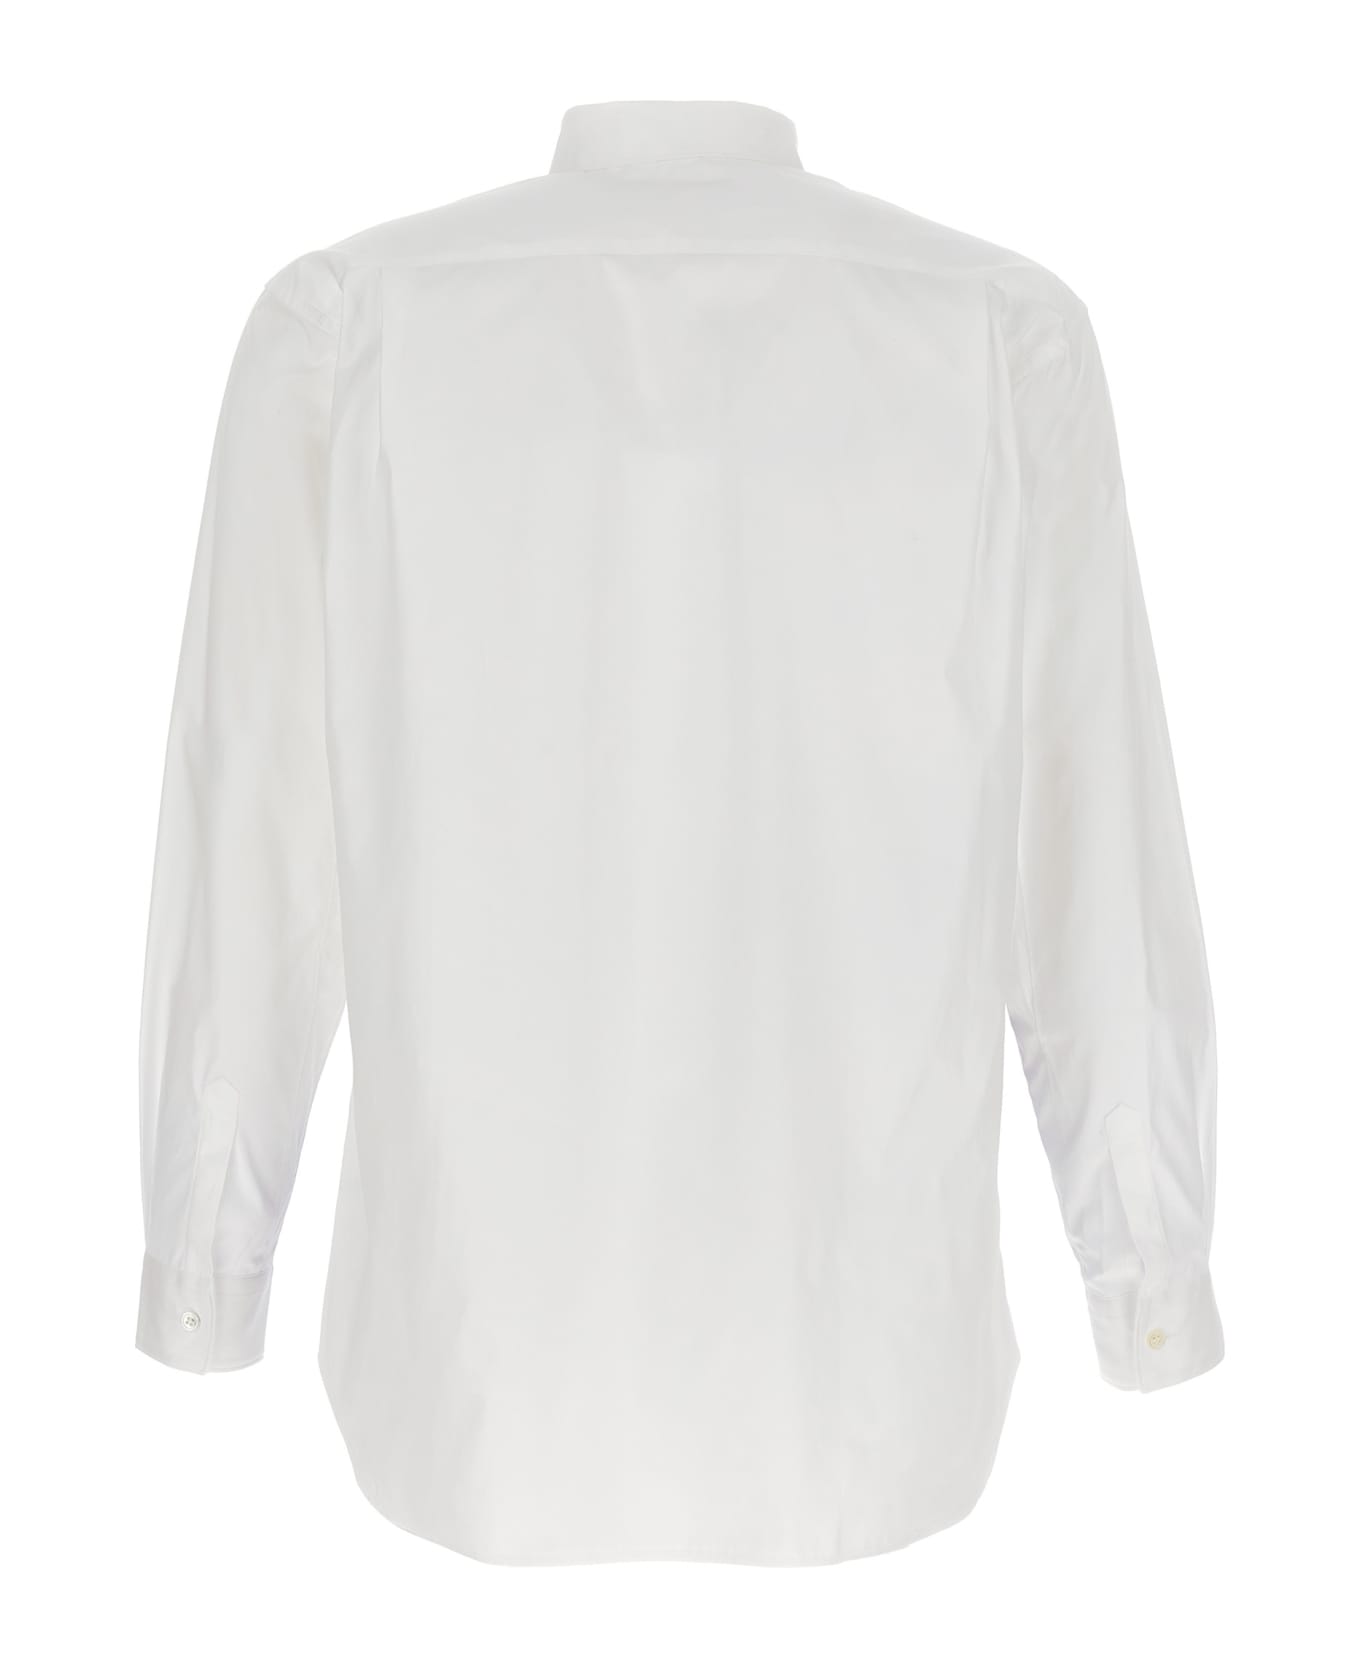 Comme des Garçons Shirt Patterned Square Shirt - White